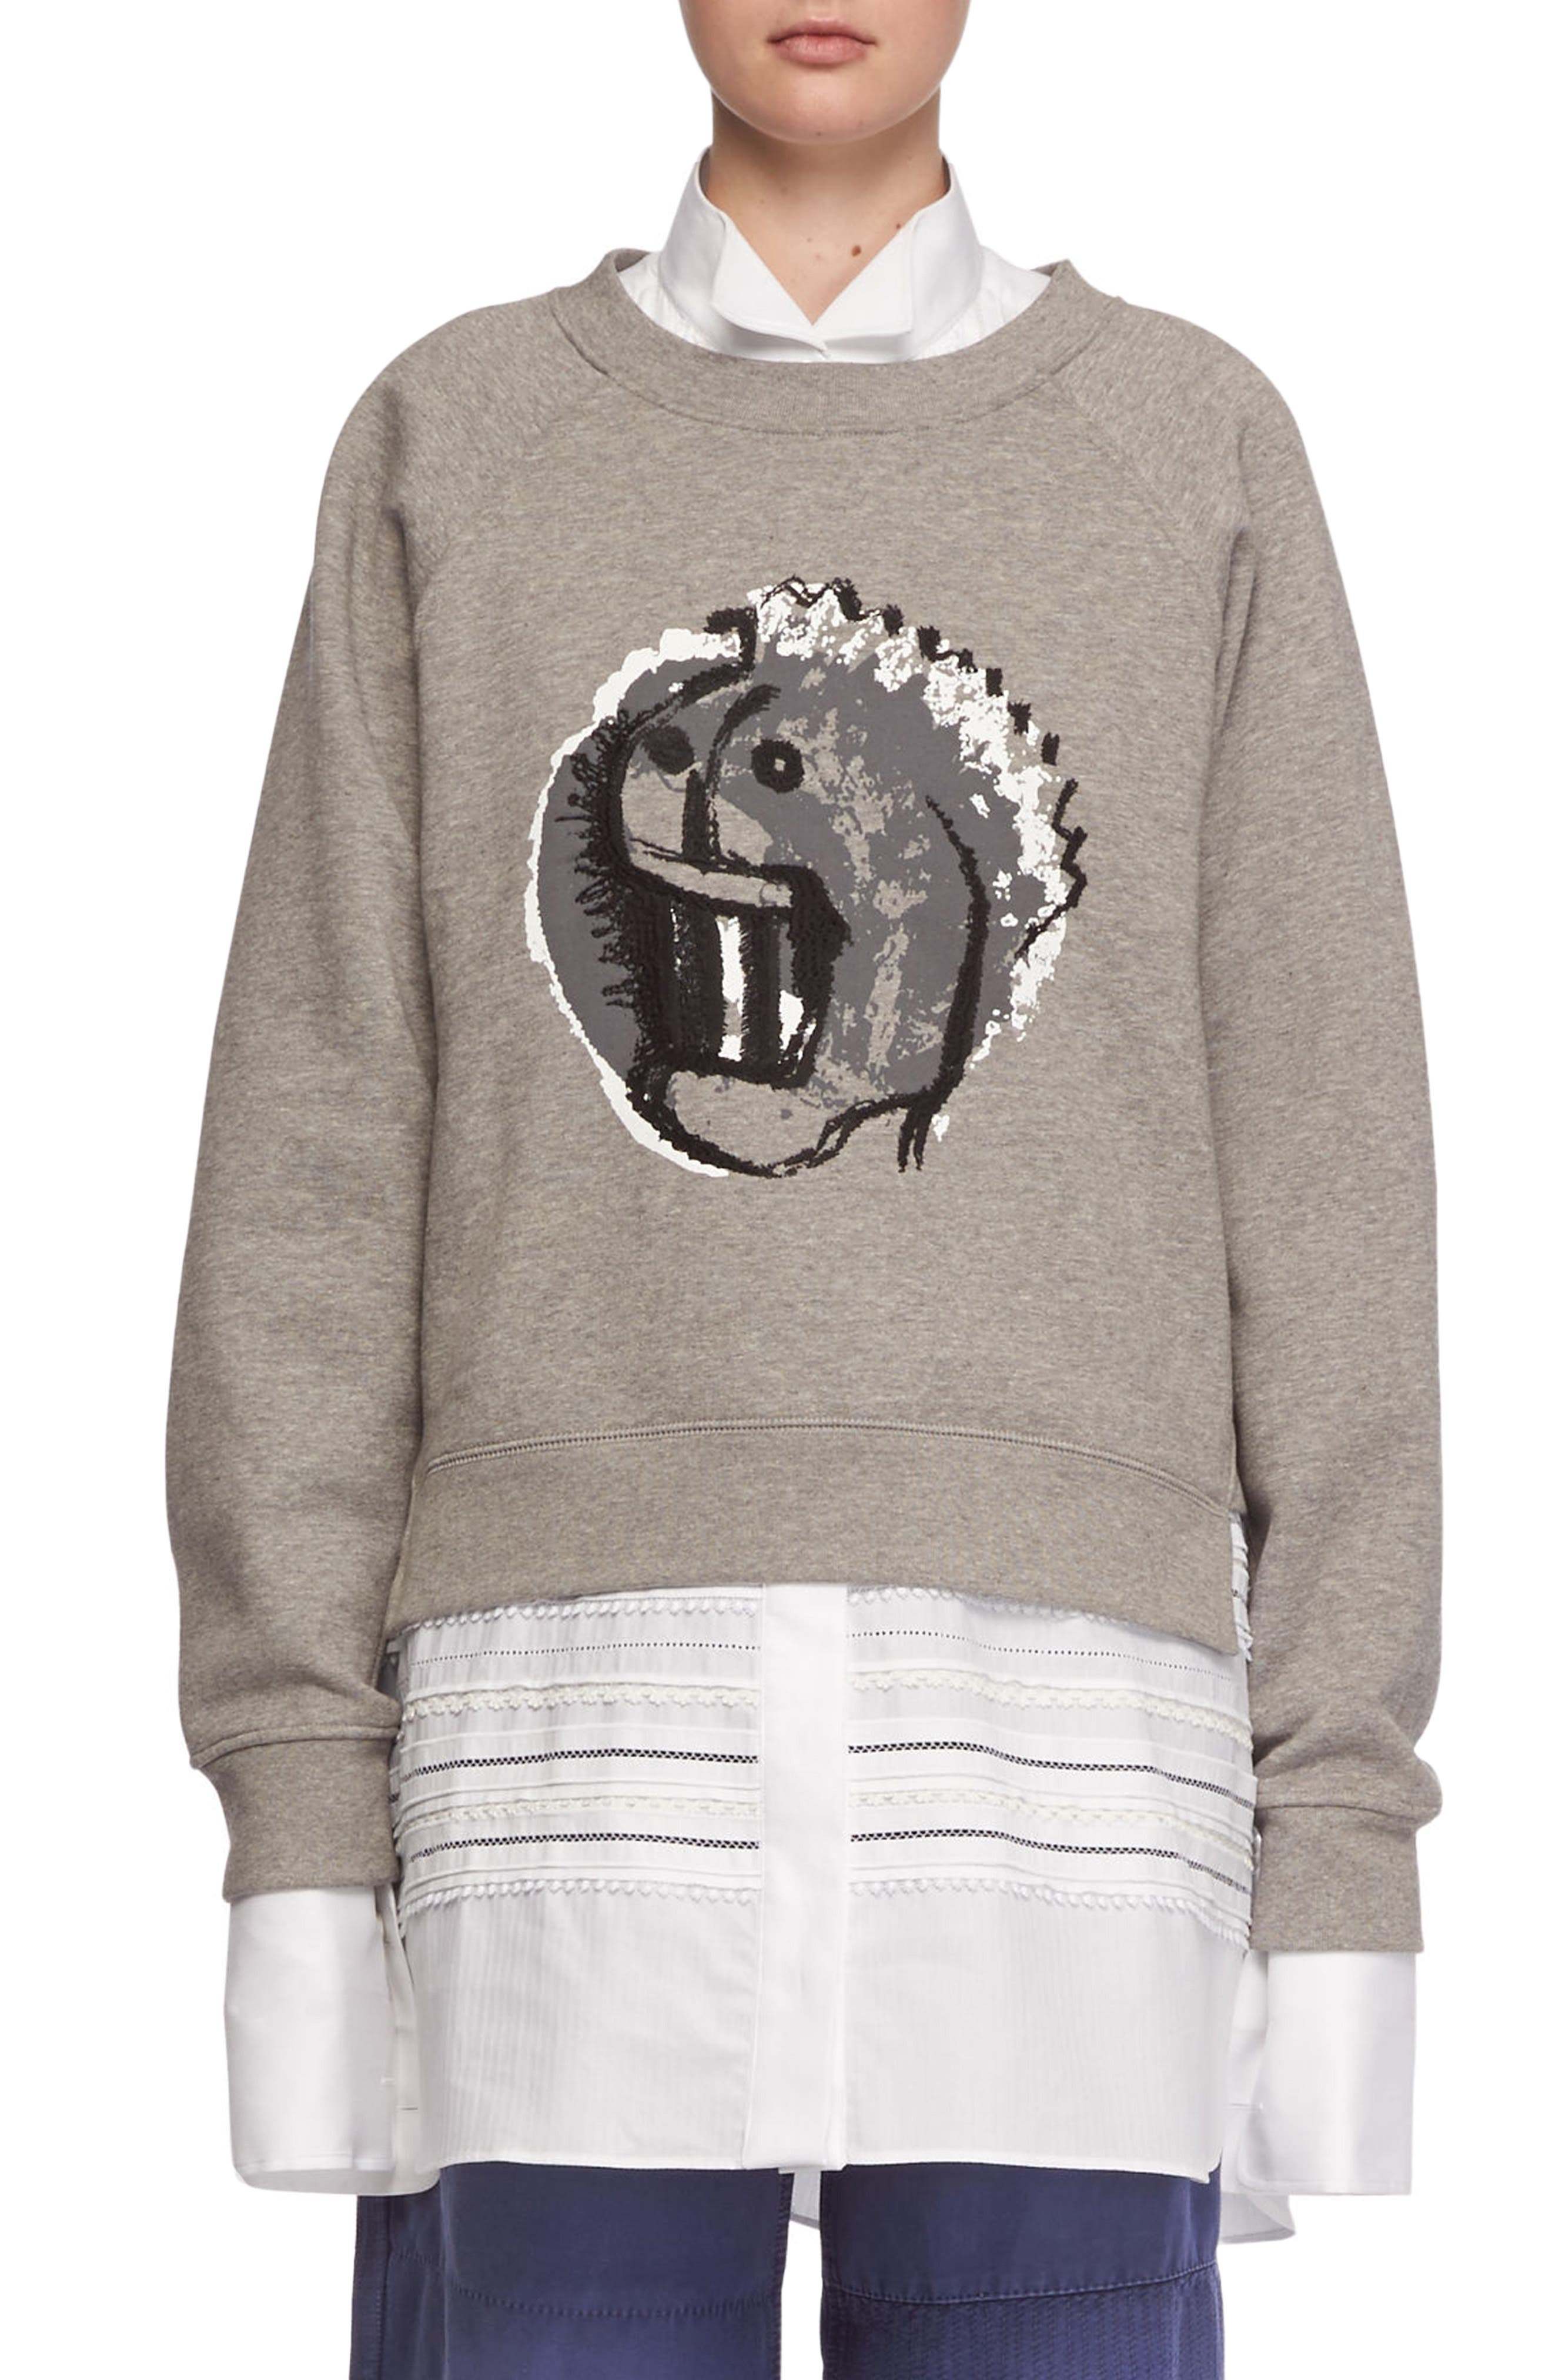 burberry sheep sweater